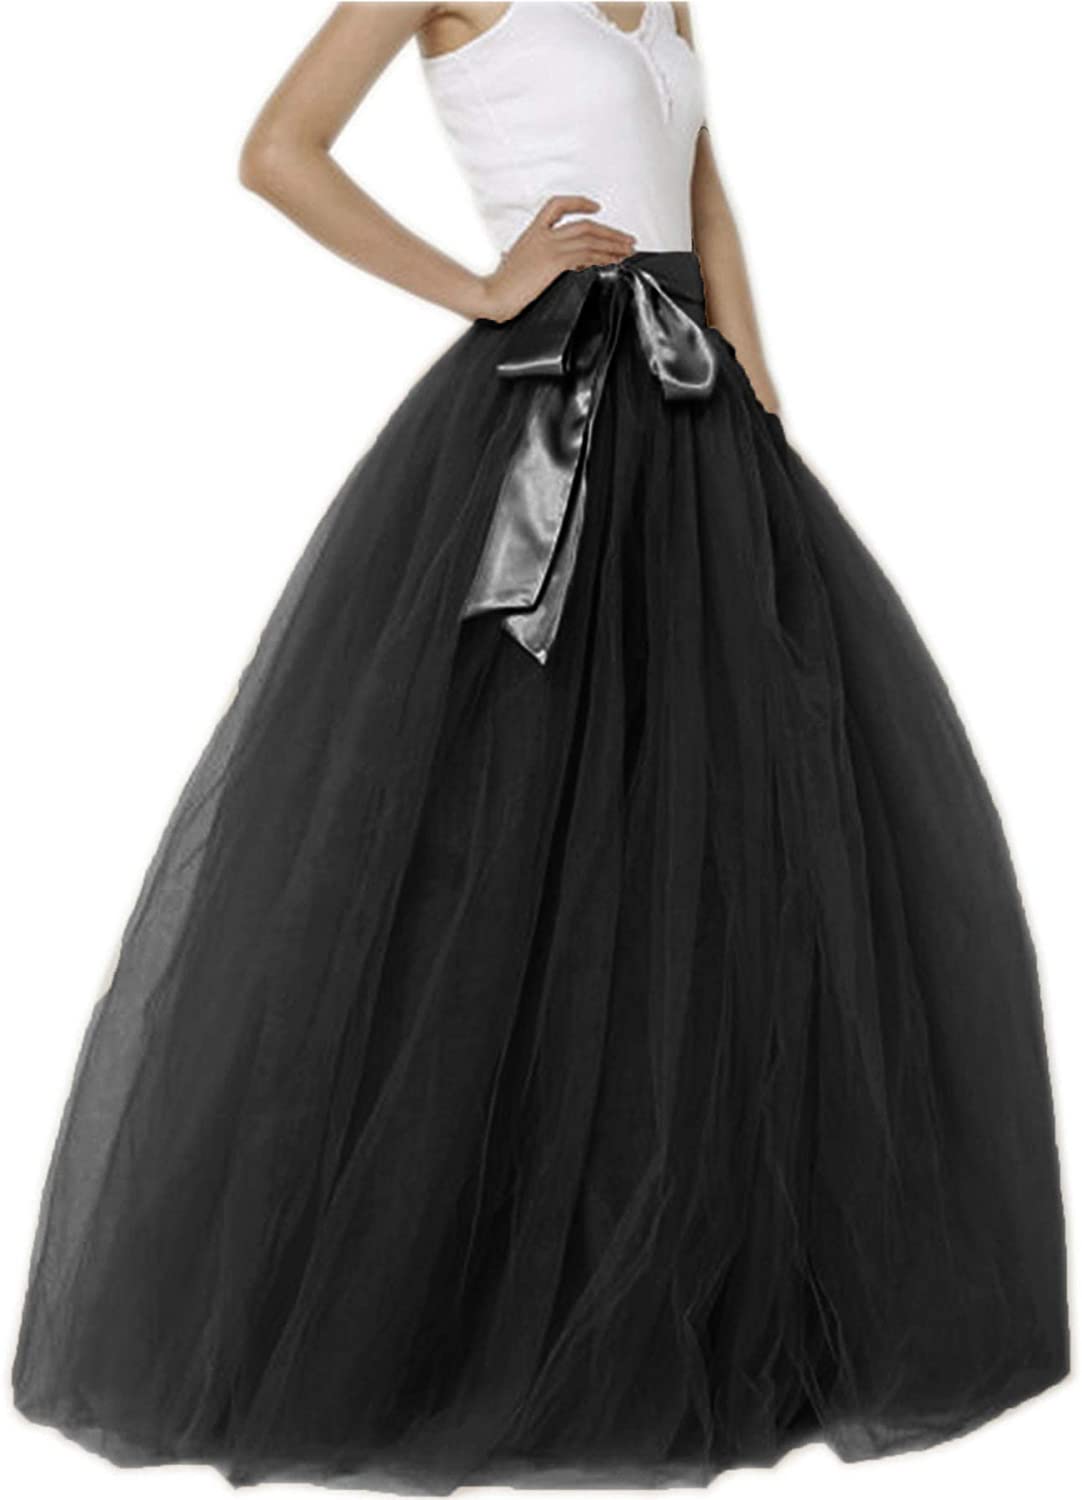 Lisong Women Floor Length Bowknot Tulle Party Evening Skirt 6, Black ...